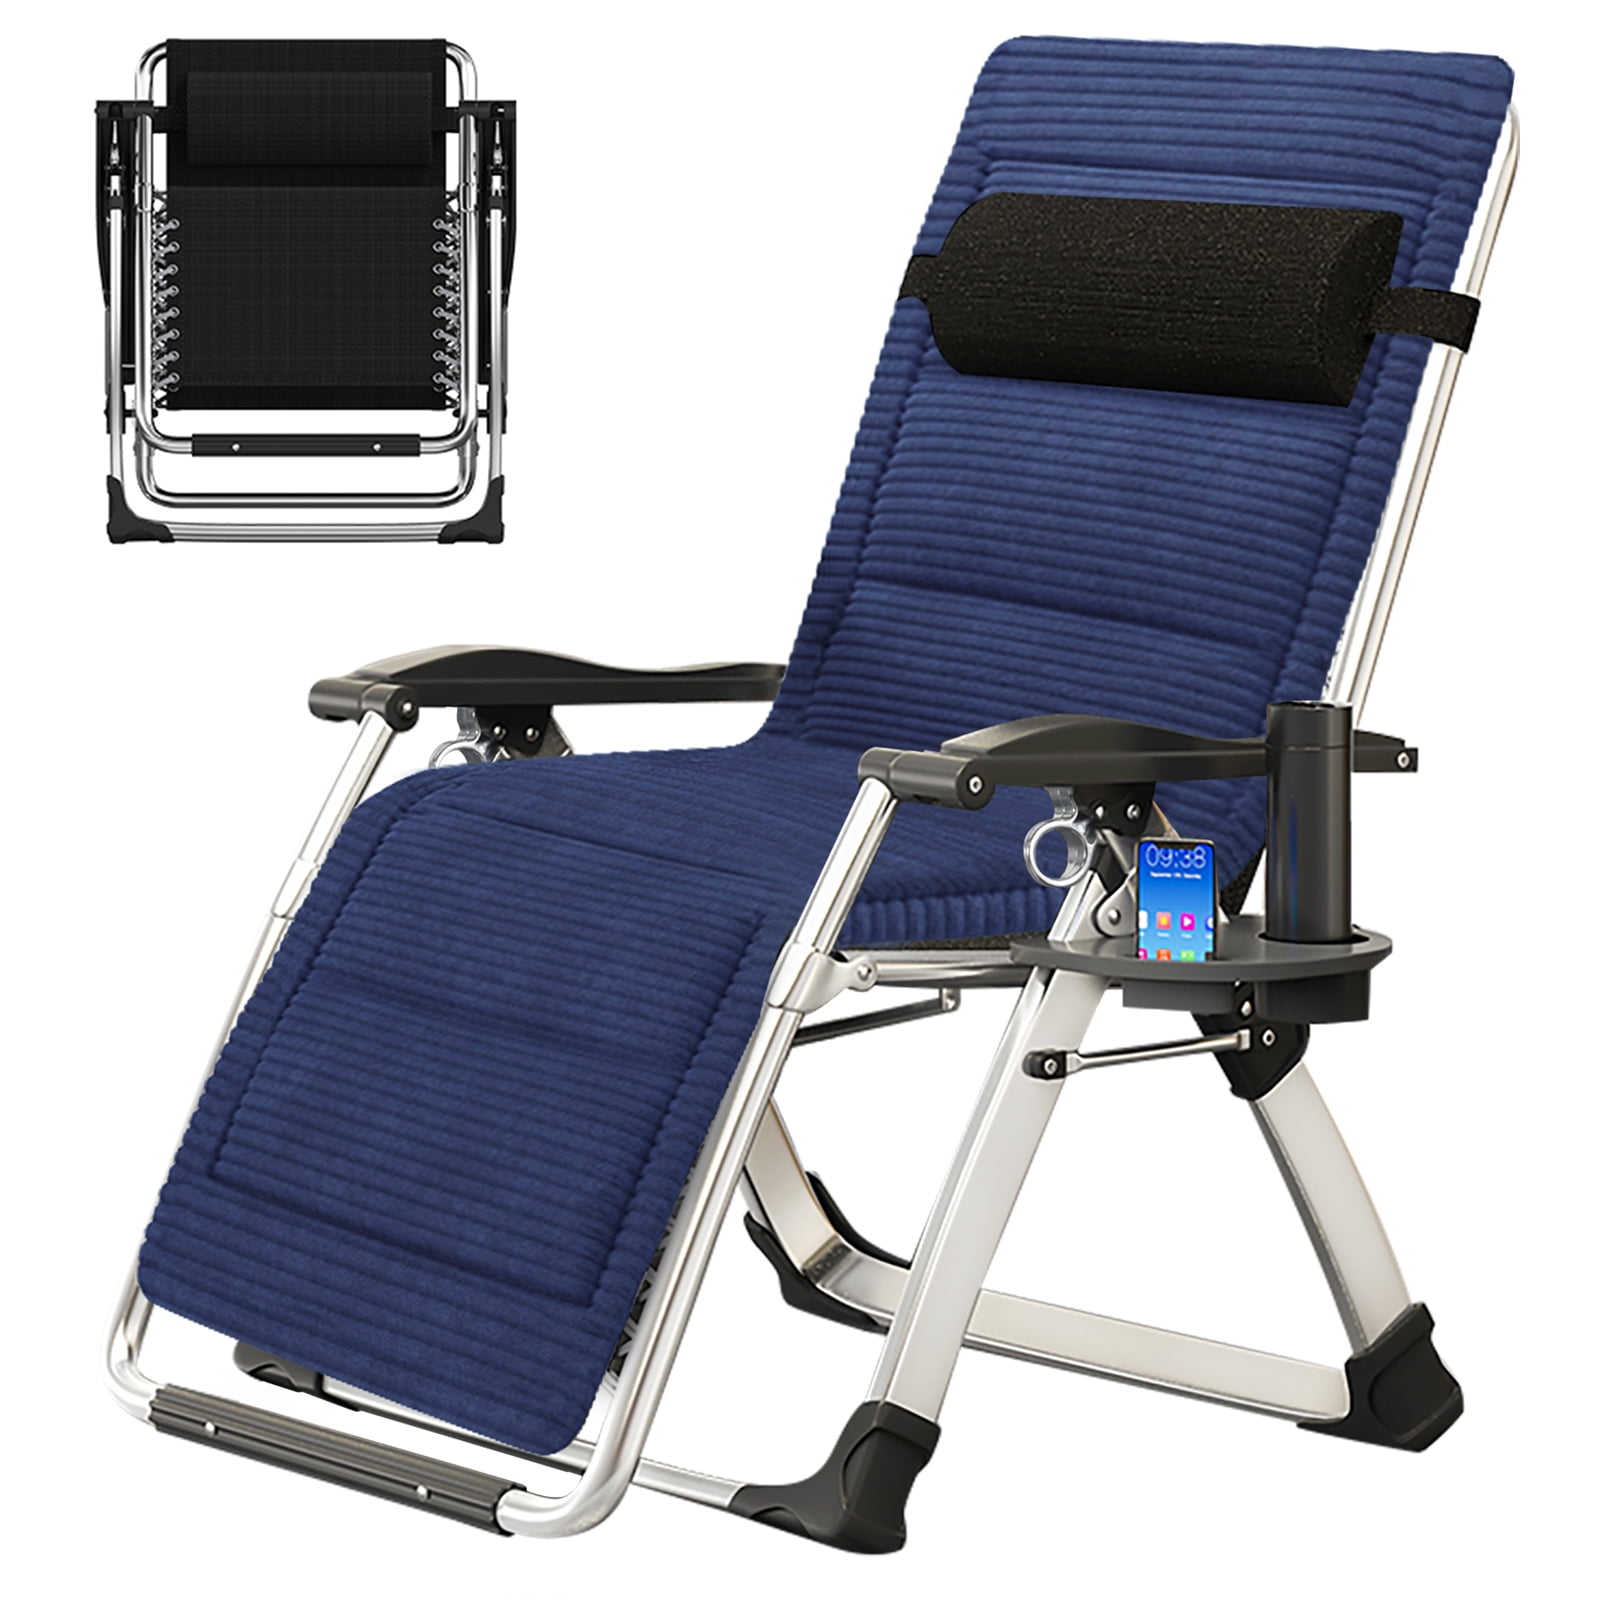 SET OF 2 Brown Garden Sun Lounger Relaxer Recliner Garden Chairs Weatherproof Textoline Folding And Multi Position With A Headrest